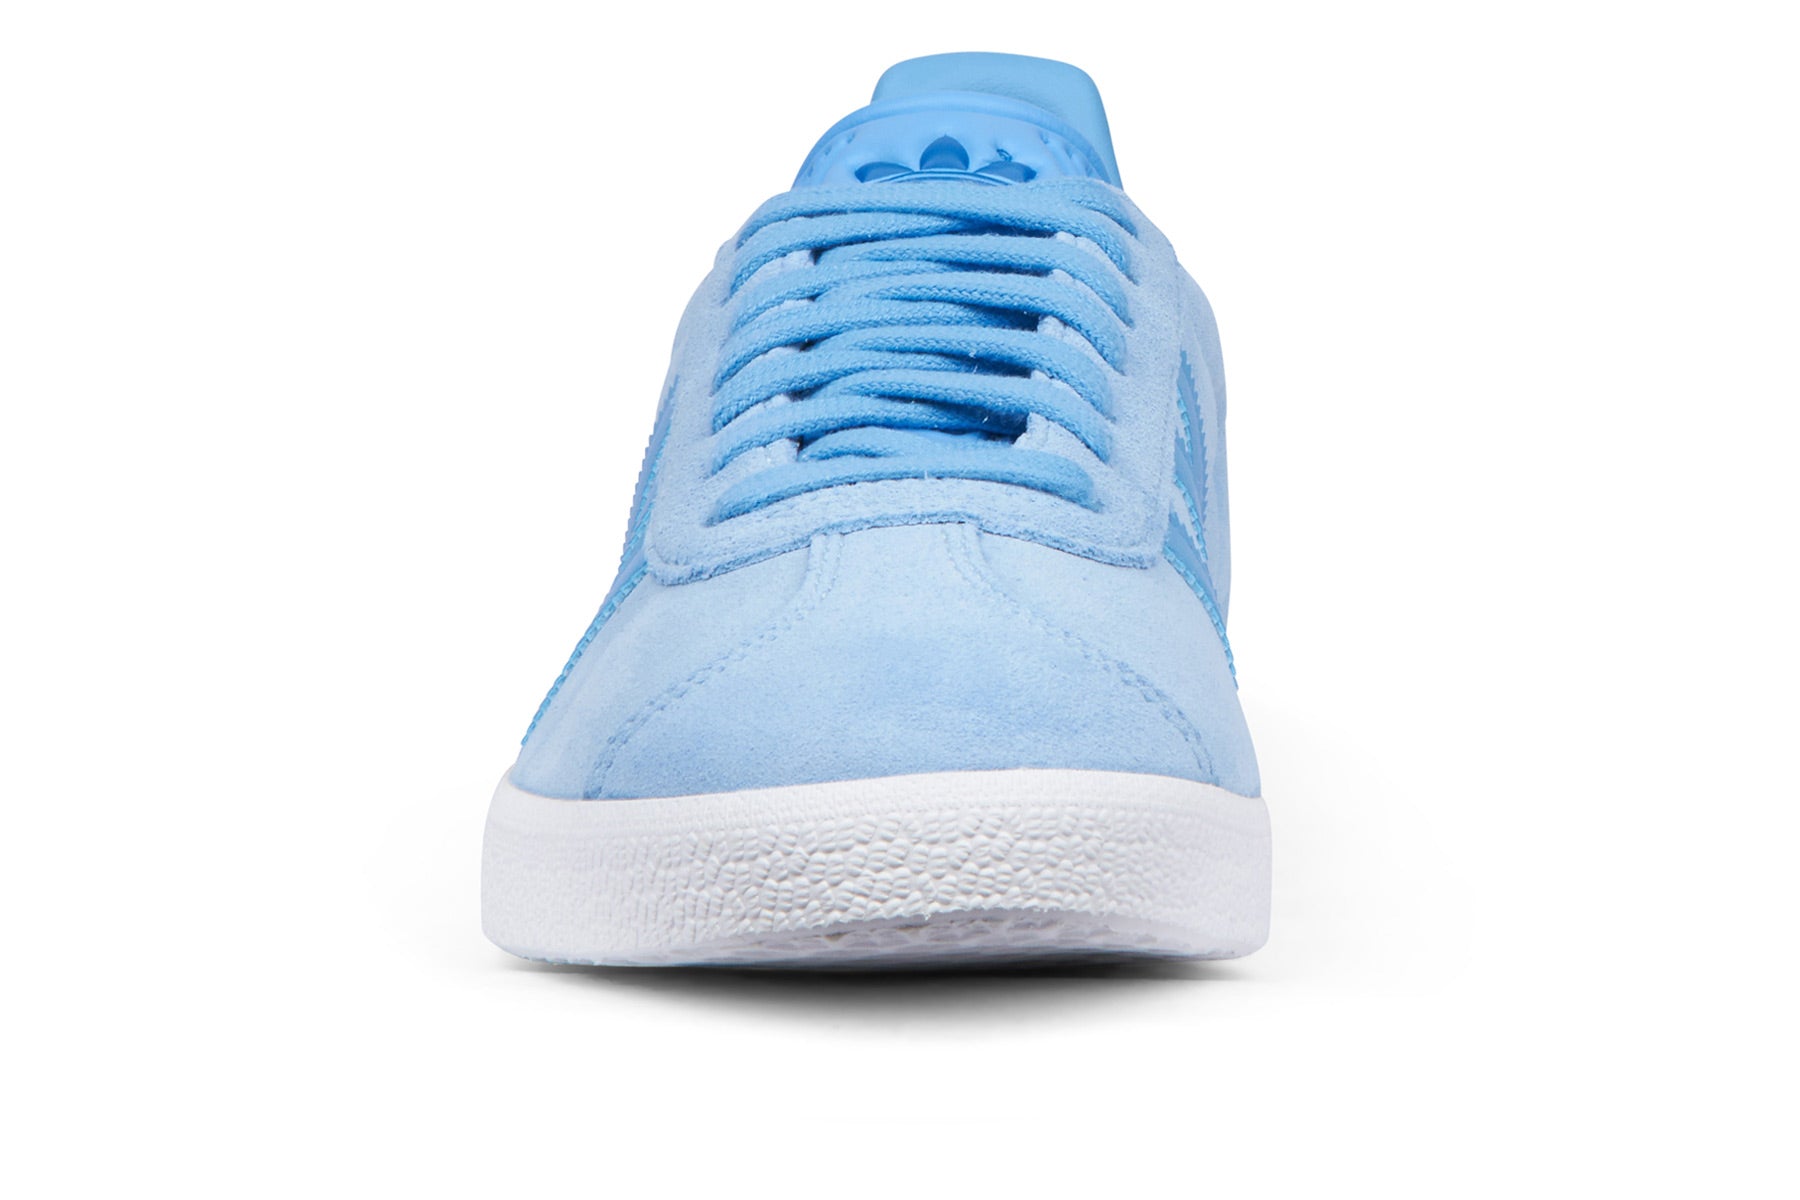 Adidas Gazelle - Clear Blue/Light Blue/Off White